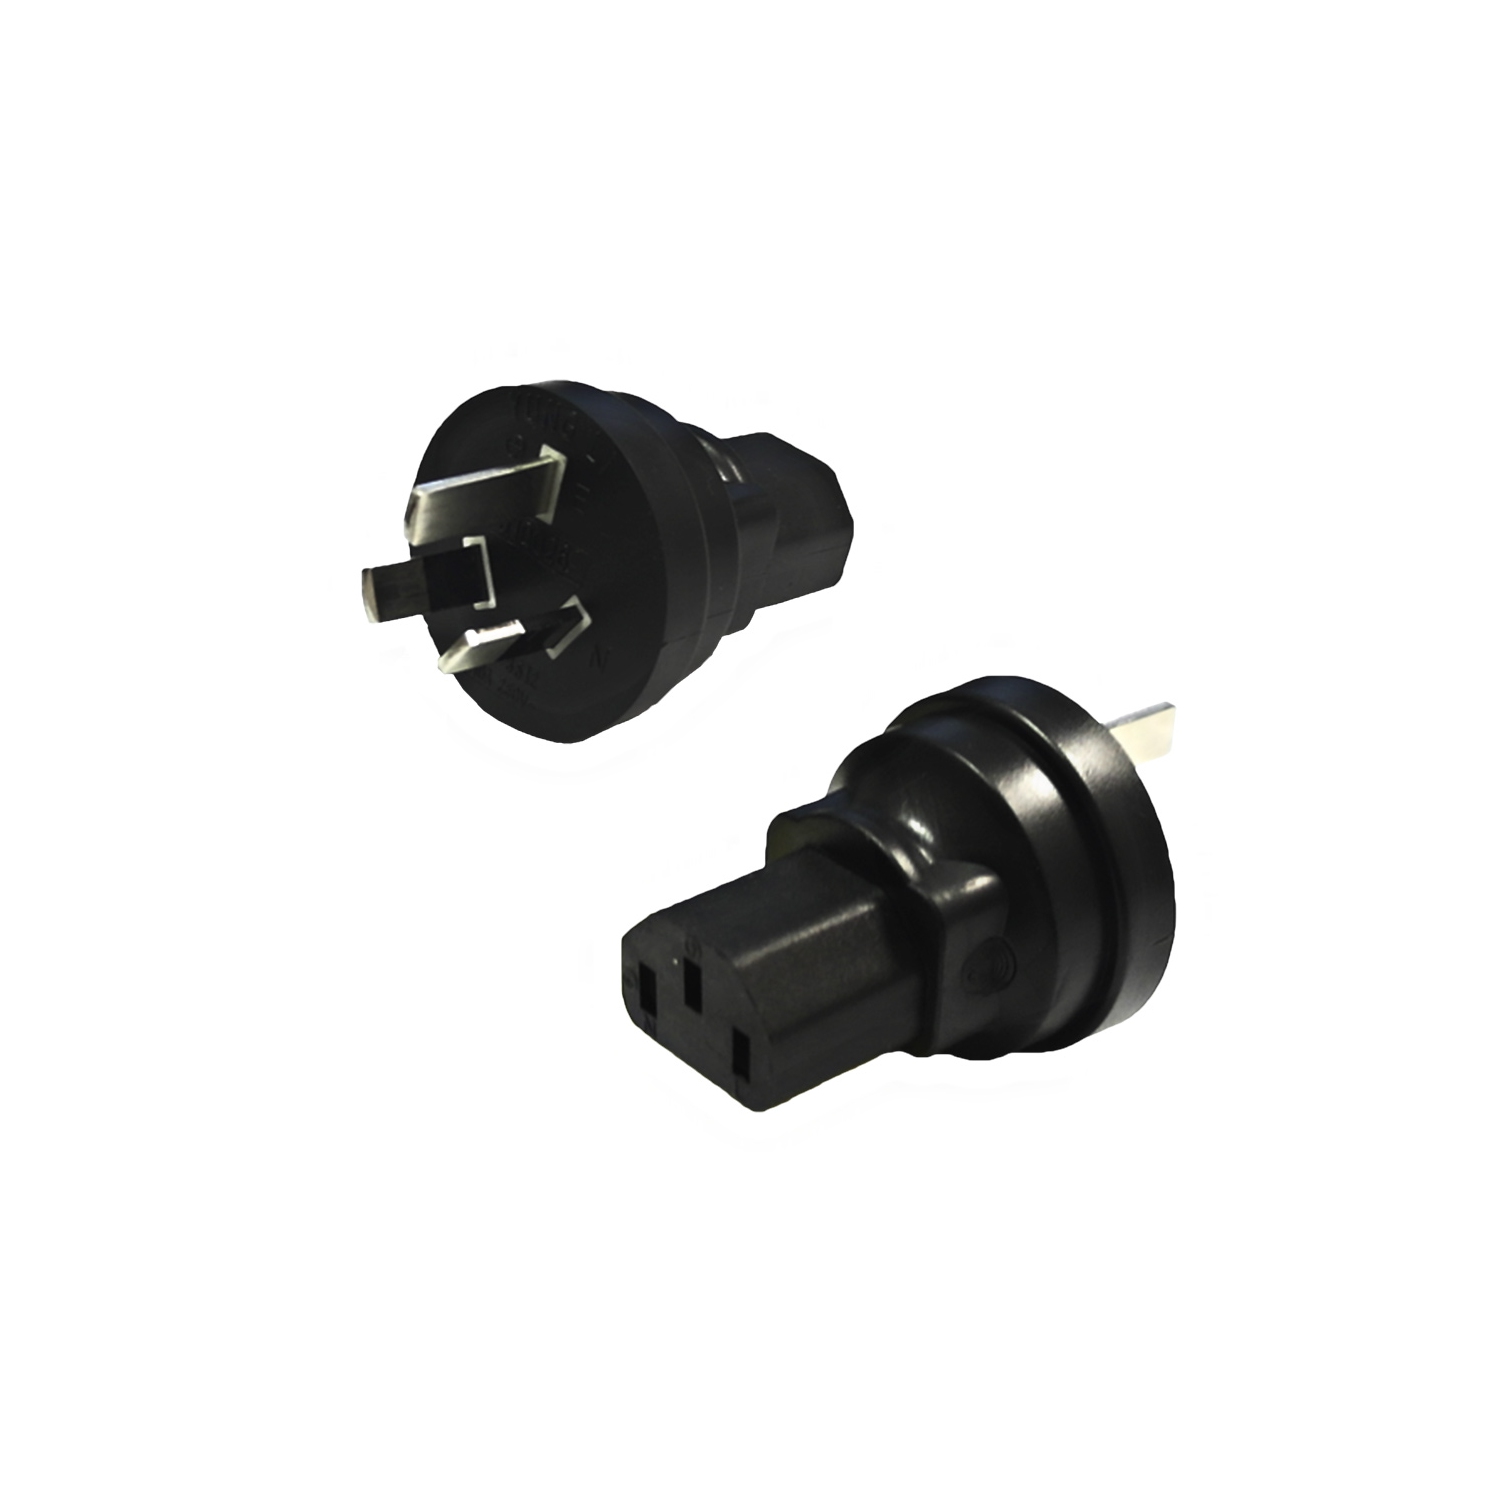 Hyfai Australia AS3112 Male Plug to C13 Female Receptacle Power Cord Converter Adapter 2PK